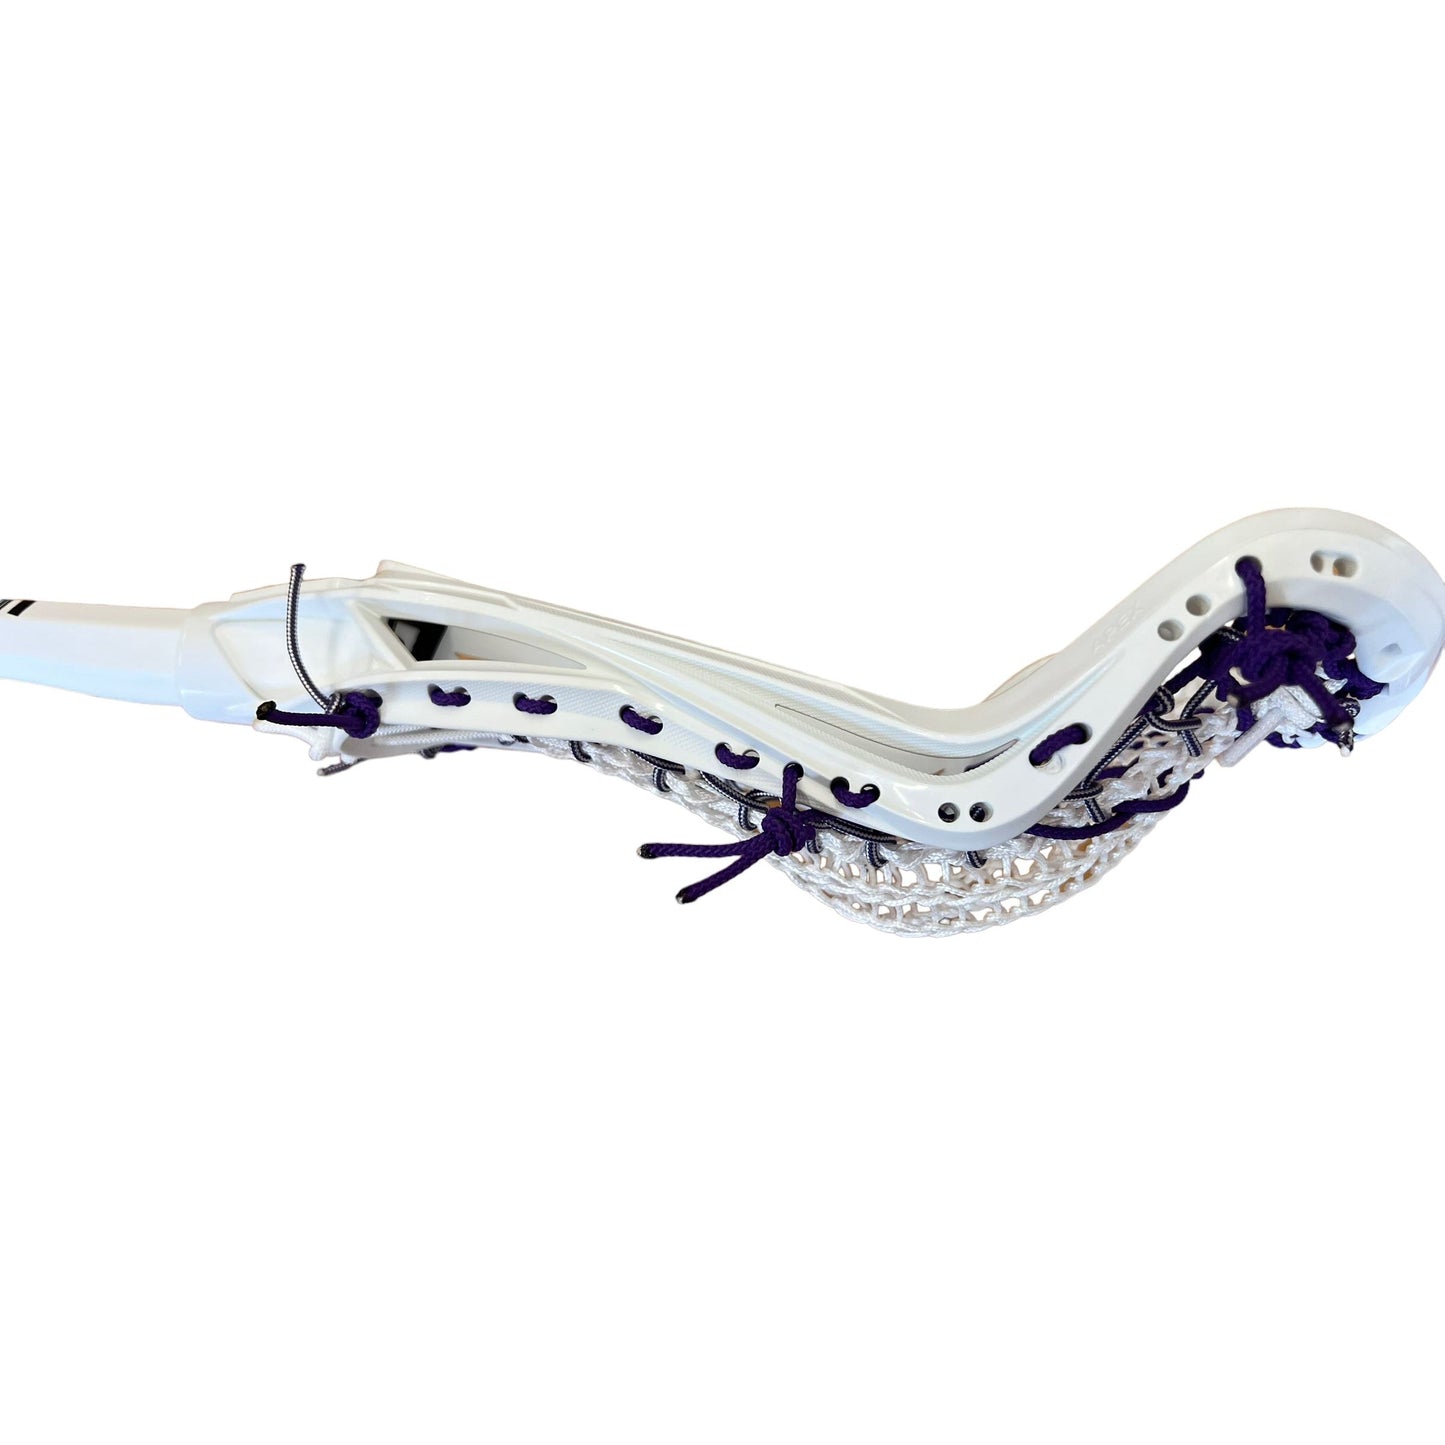 Custom Strung Gait Apex Complete Women's Lacrosse Stick with Armor Mesh Valkyrie Pocket White/Purple